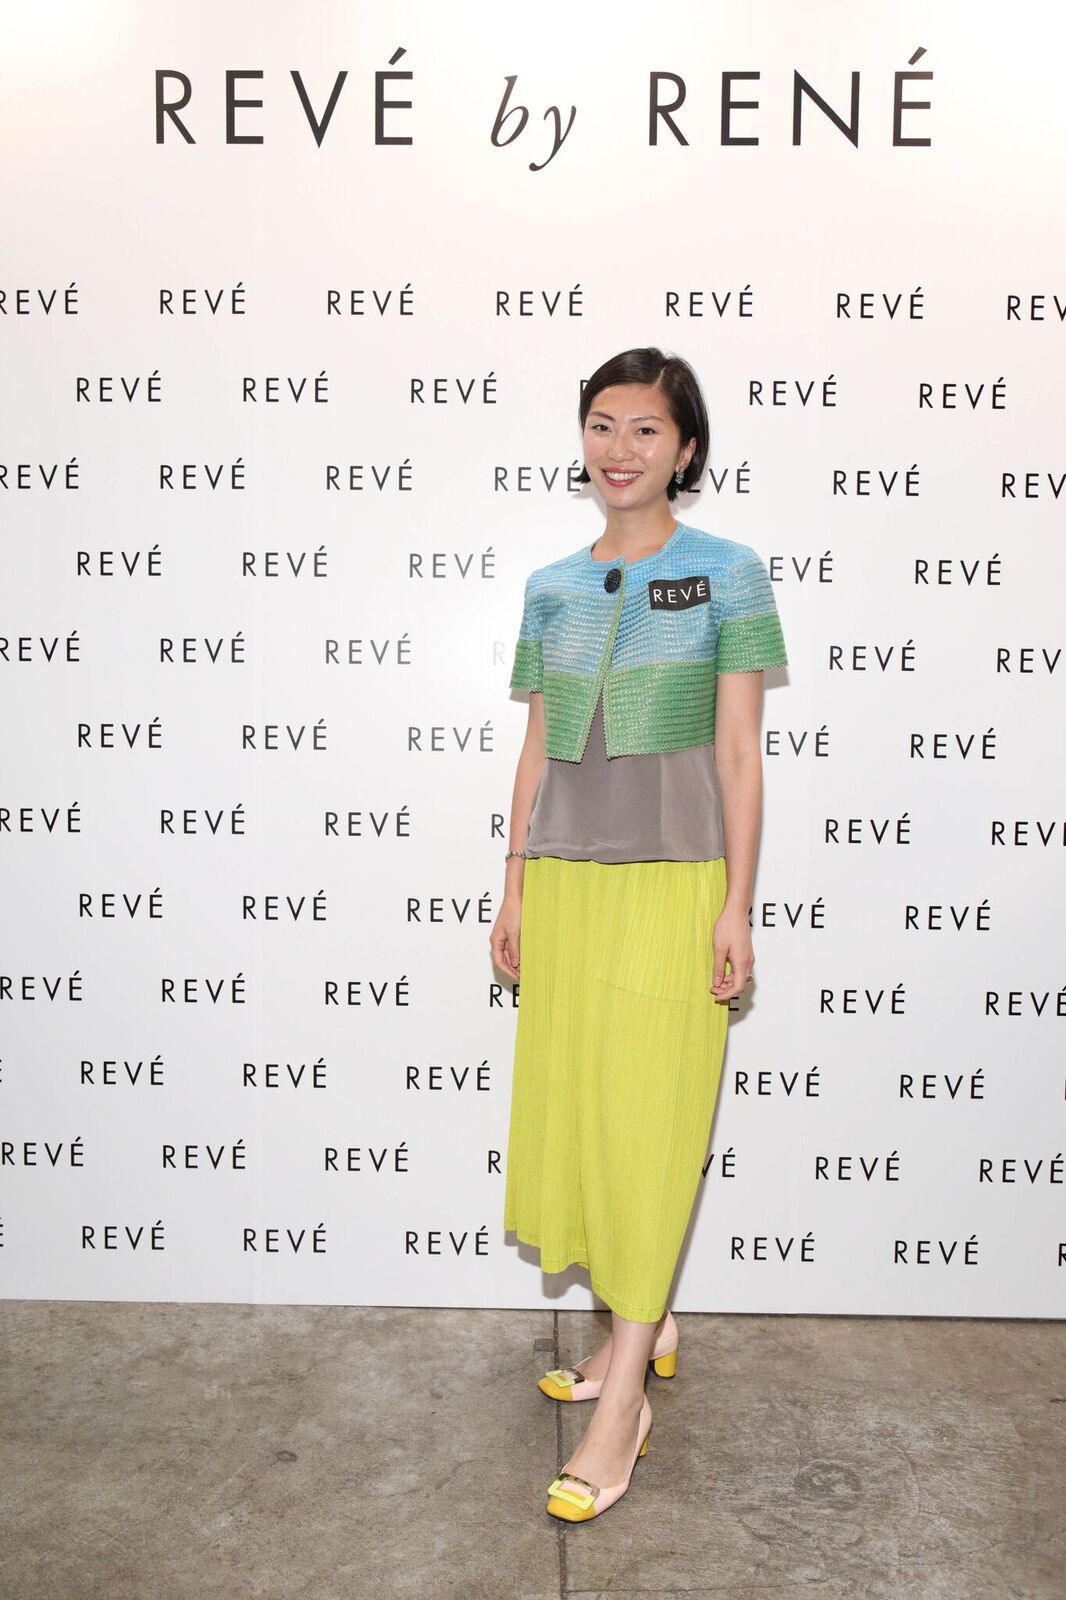 REVÉ by RENÉ 5 Senses Hong Kong Launch Event